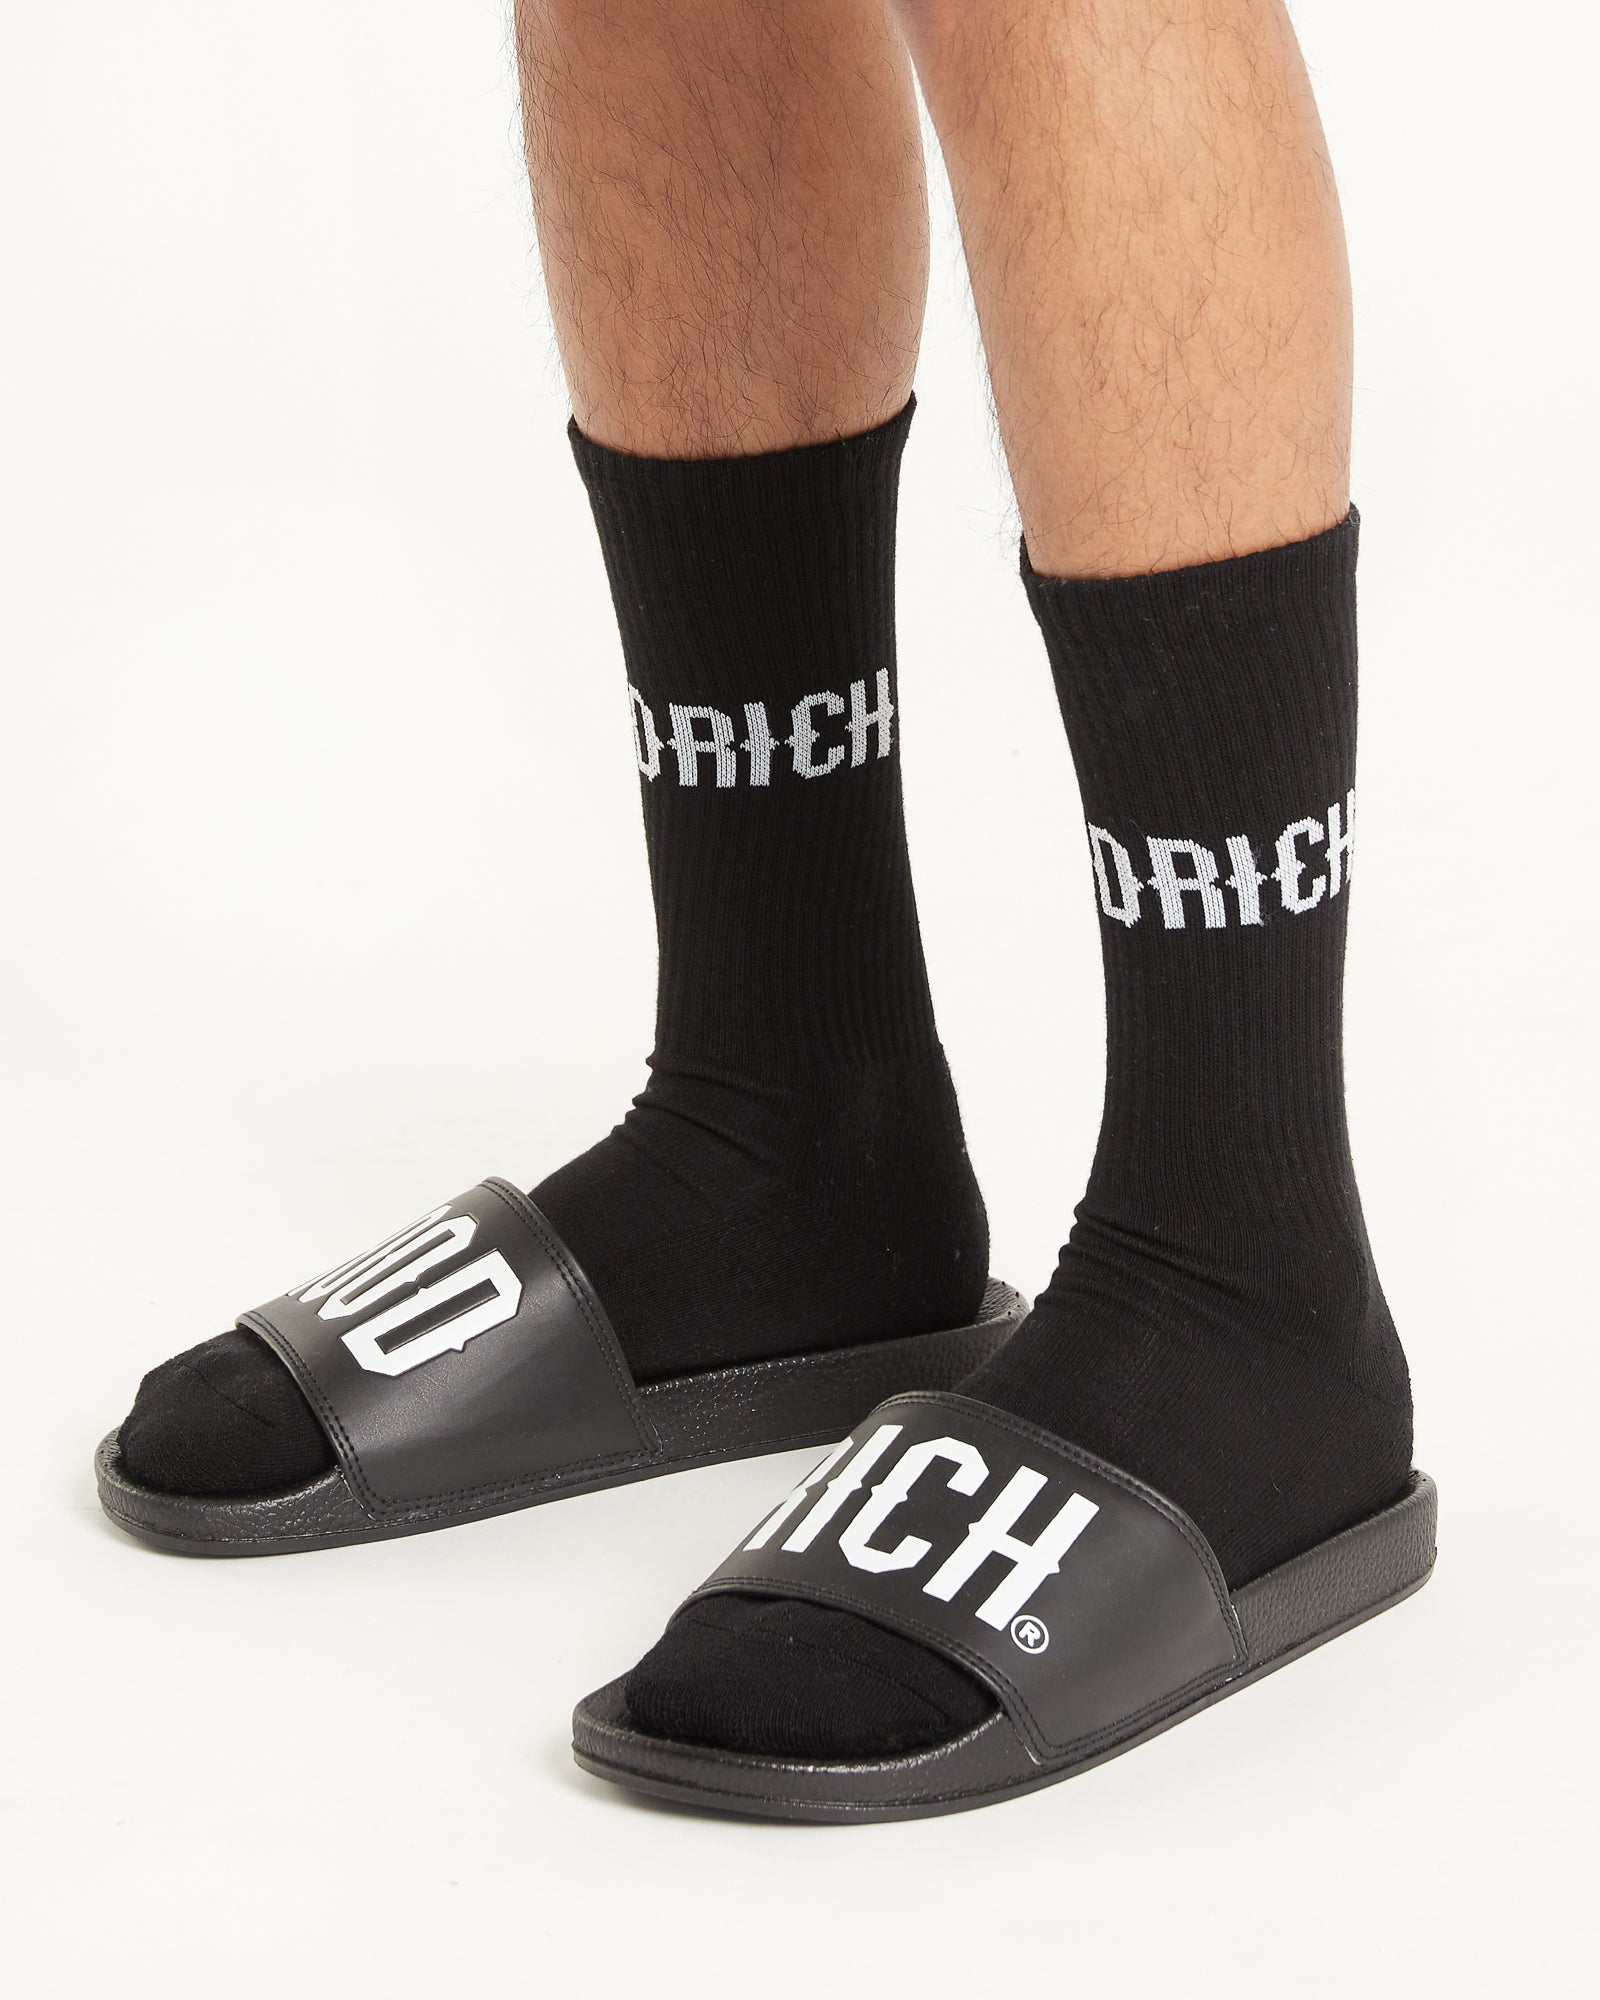 OG Core 3 Pack Socks - Black/White - Accessories - HOODRICH LIFESTYLE